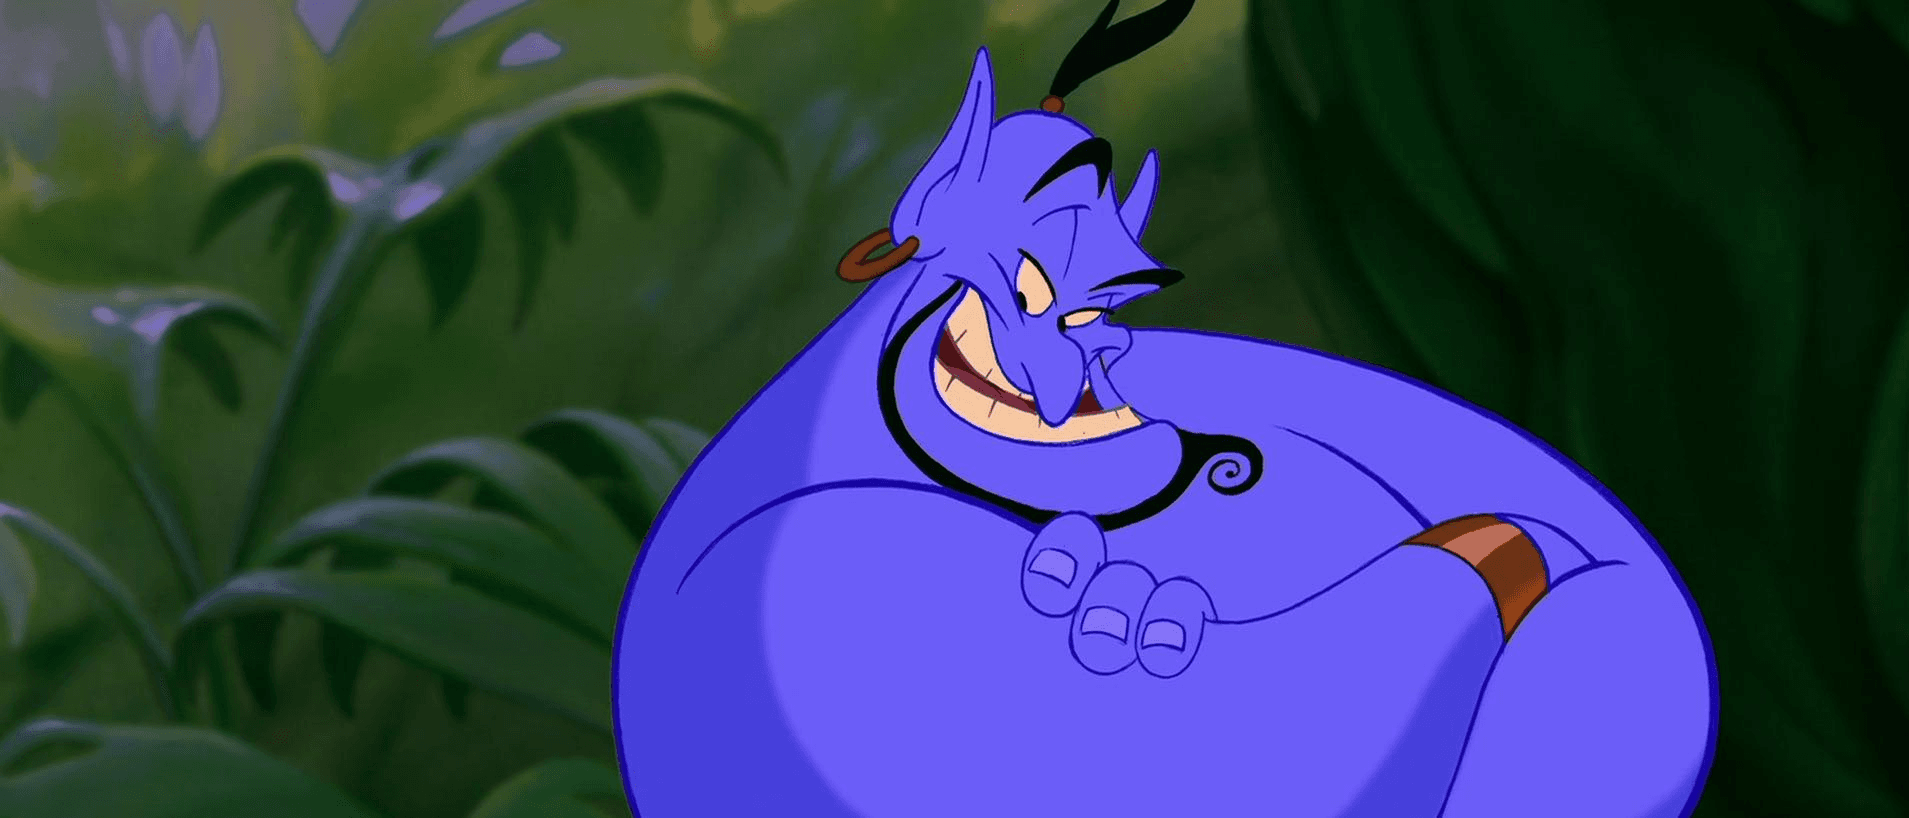 The Genie in Aladdin on Netflix